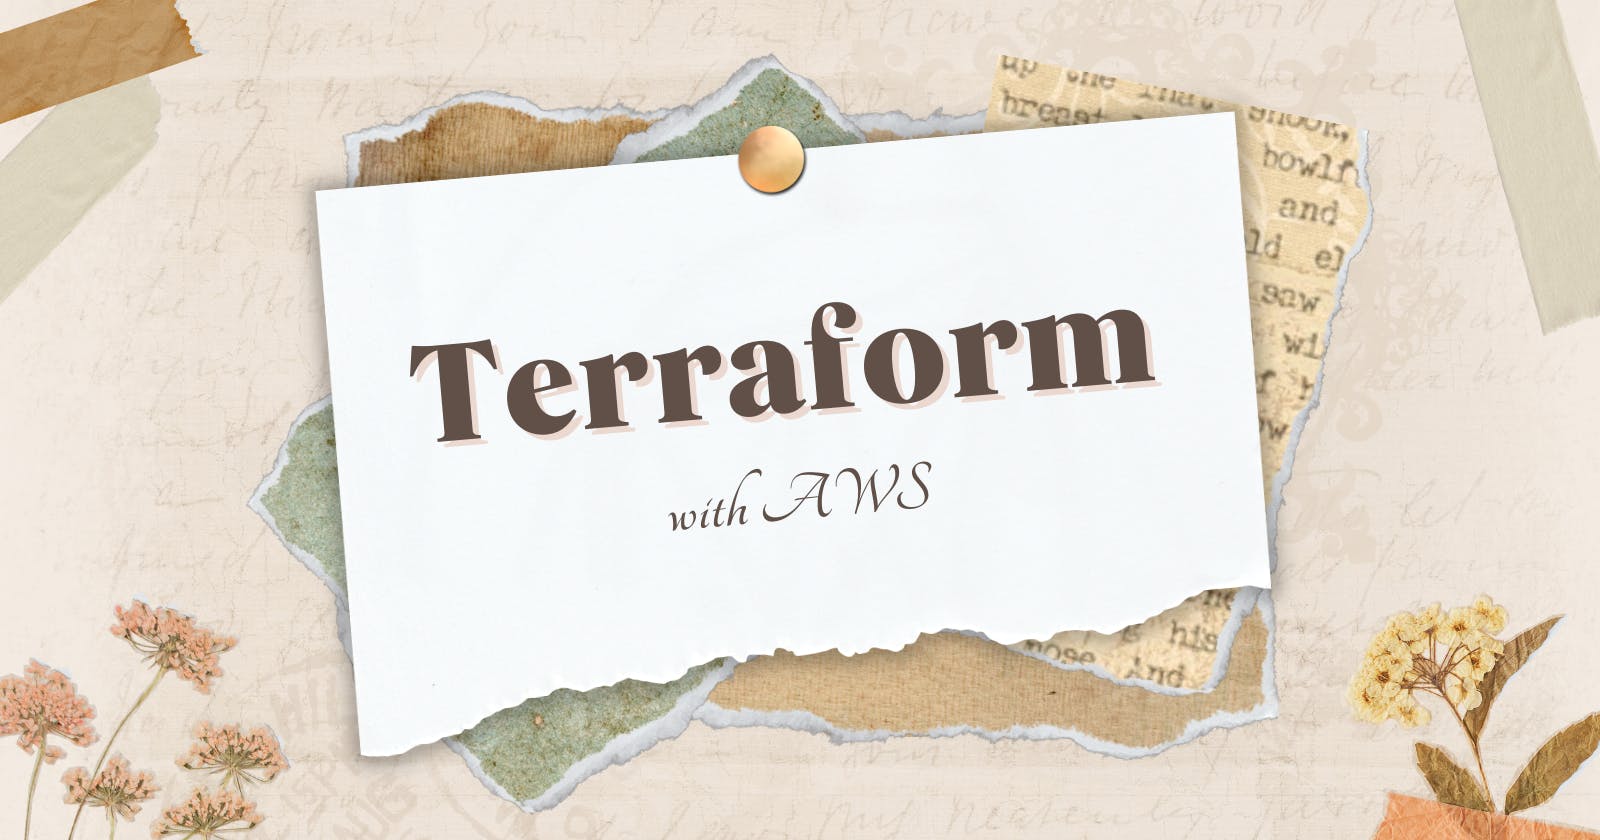 Day 48: Terraform with AWS